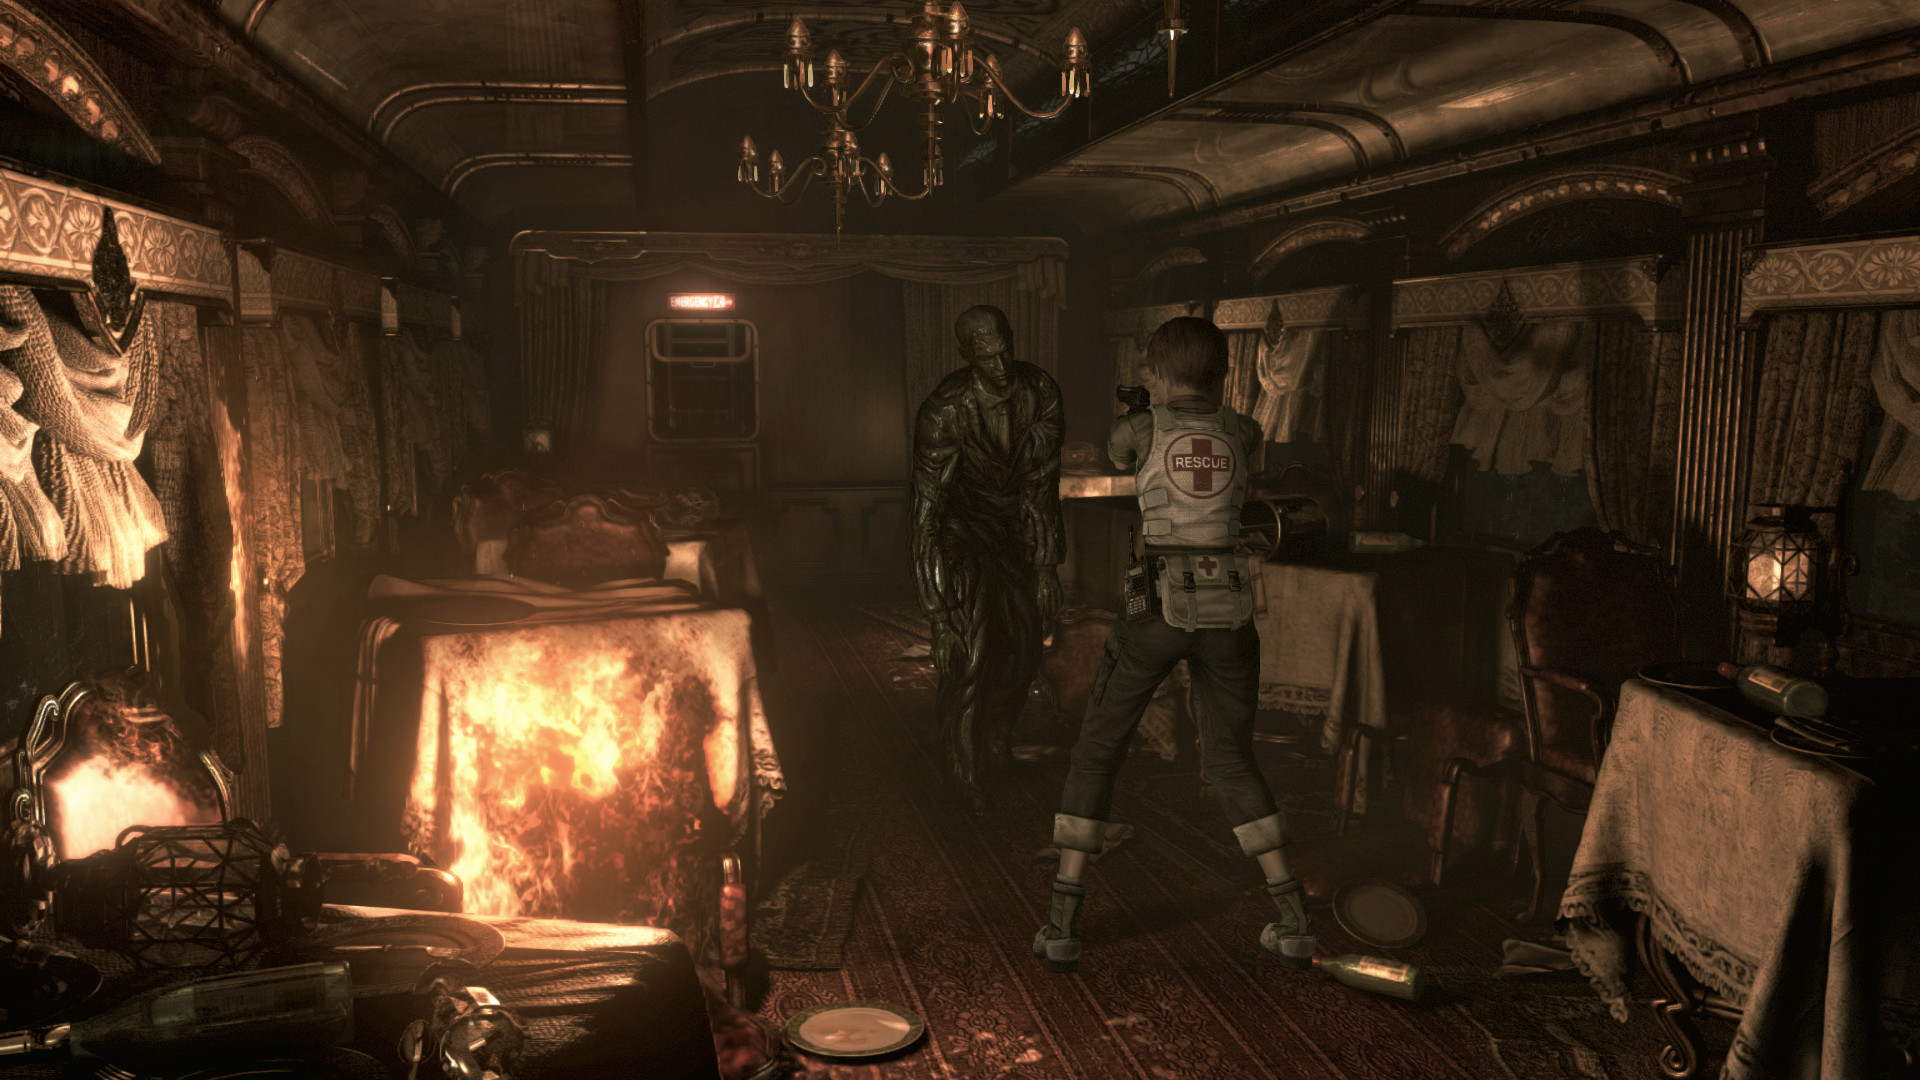 Save 75% on Resident Evil 0 on Steam